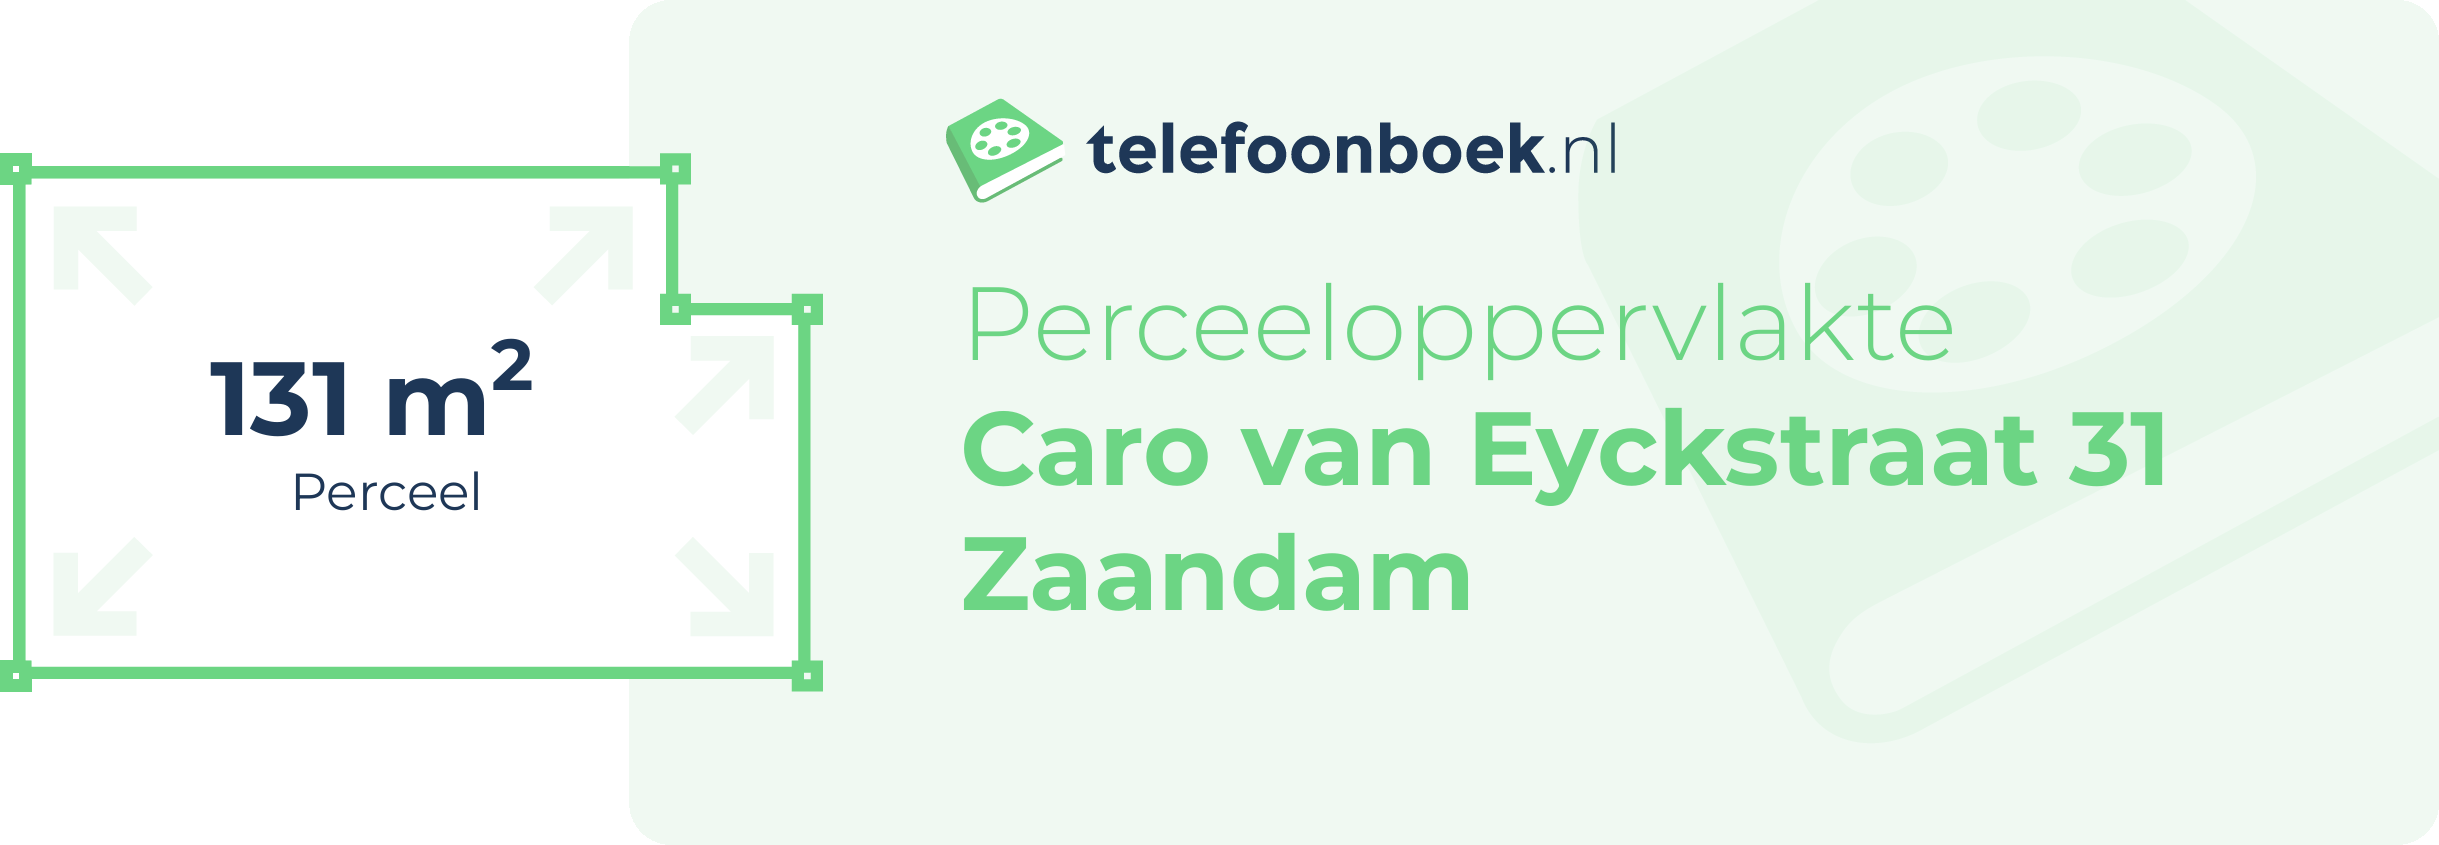 Perceeloppervlakte Caro Van Eyckstraat 31 Zaandam